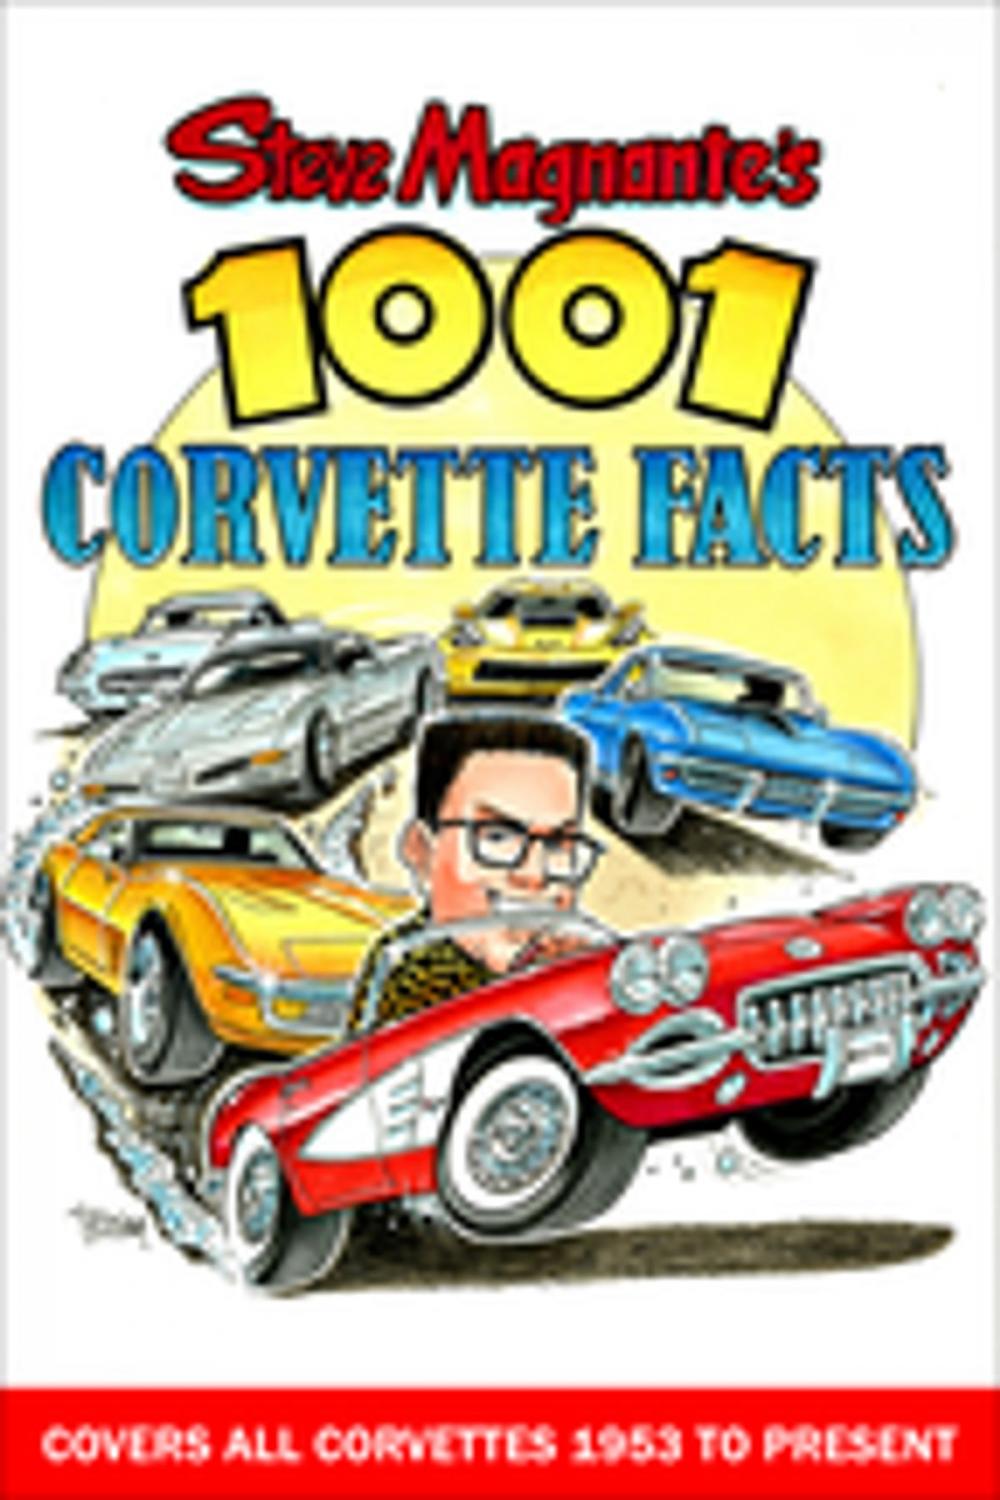 Big bigCover of Steve Magnante's 1001 Corvette Facts